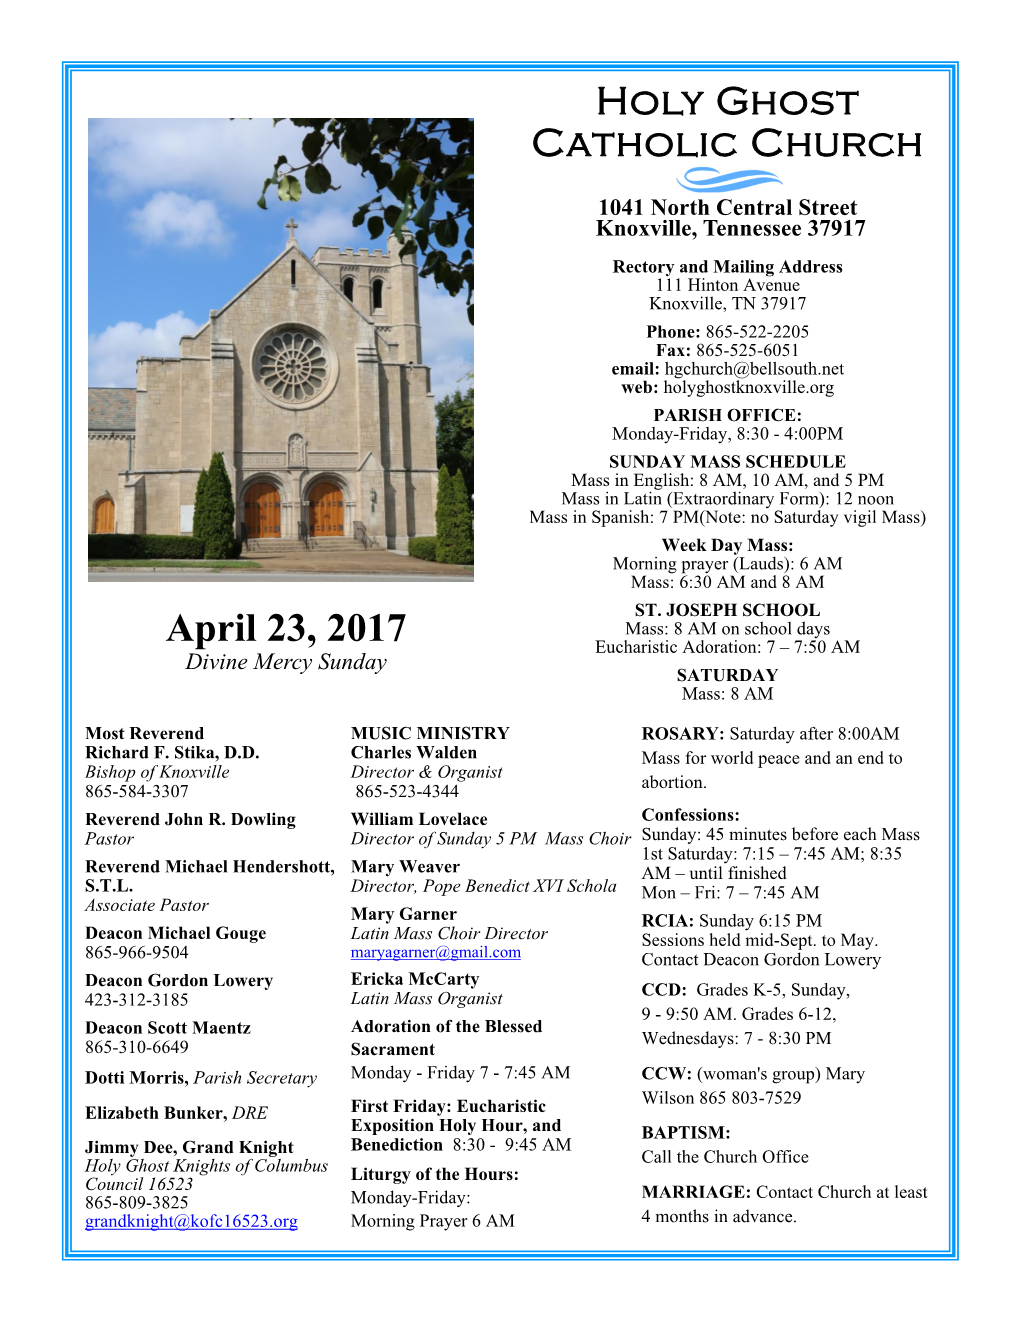 Holy Ghost Catholic Church April 23, 2017